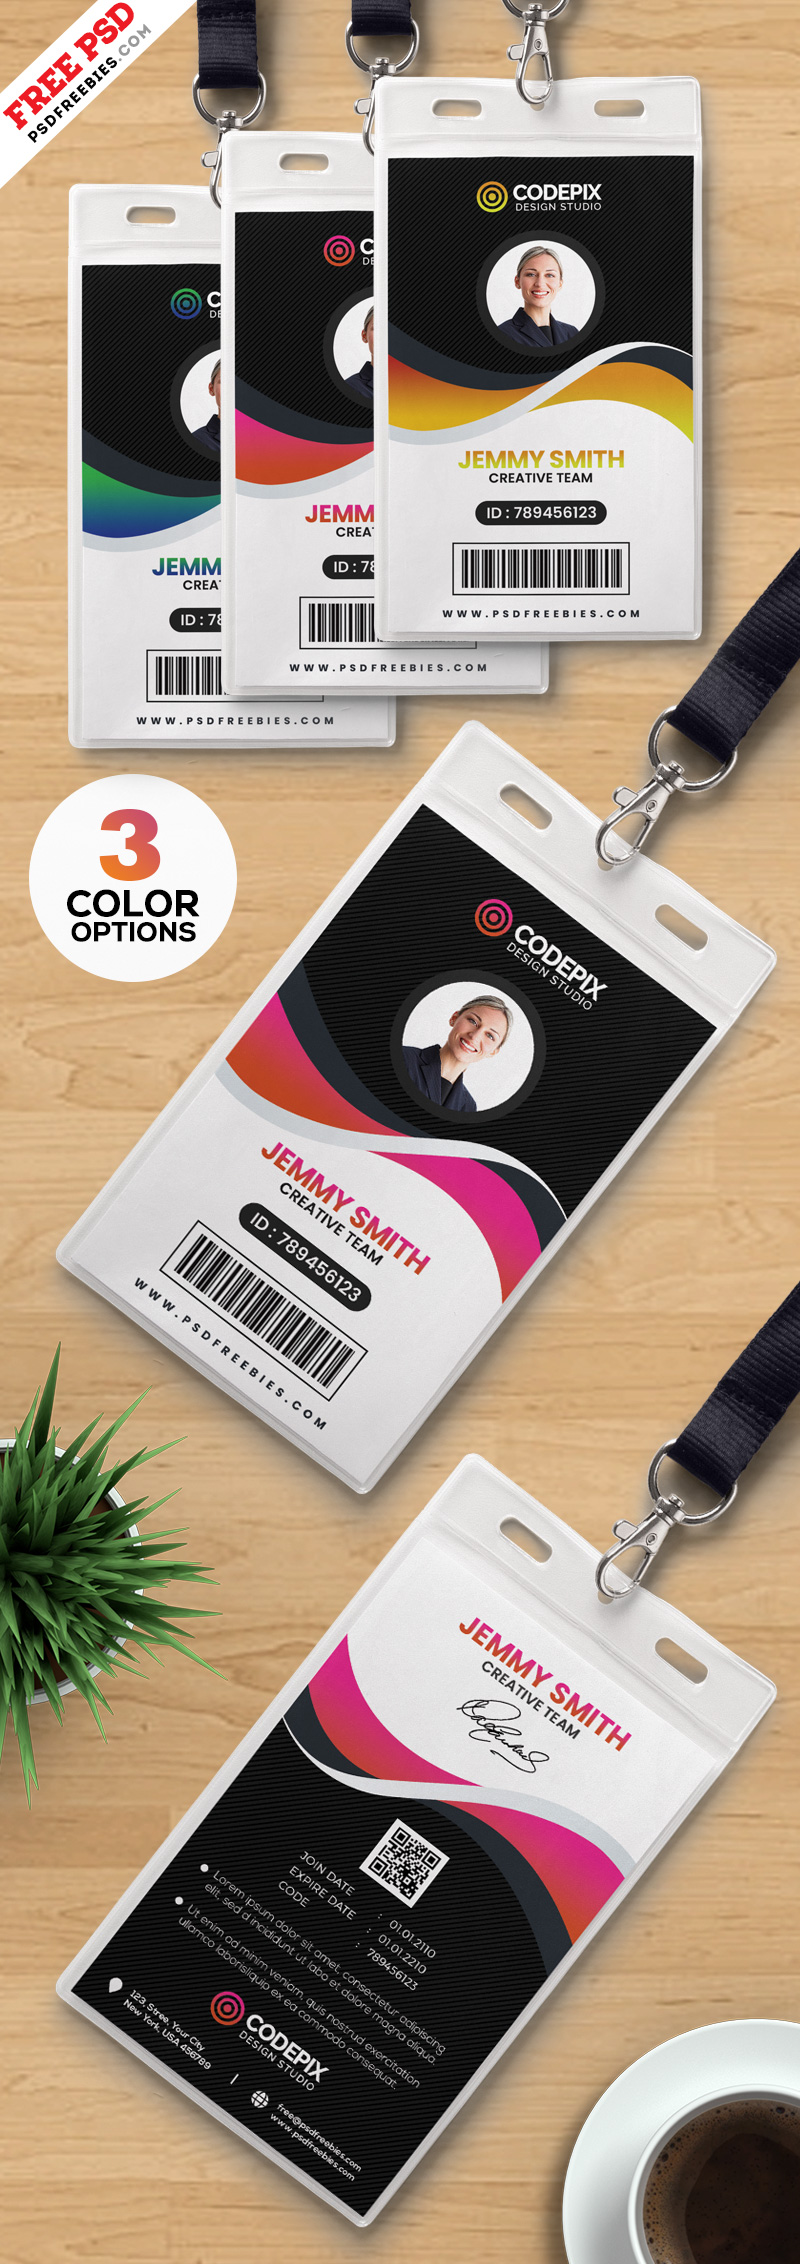 PSD Corporate Employee ID Card Design